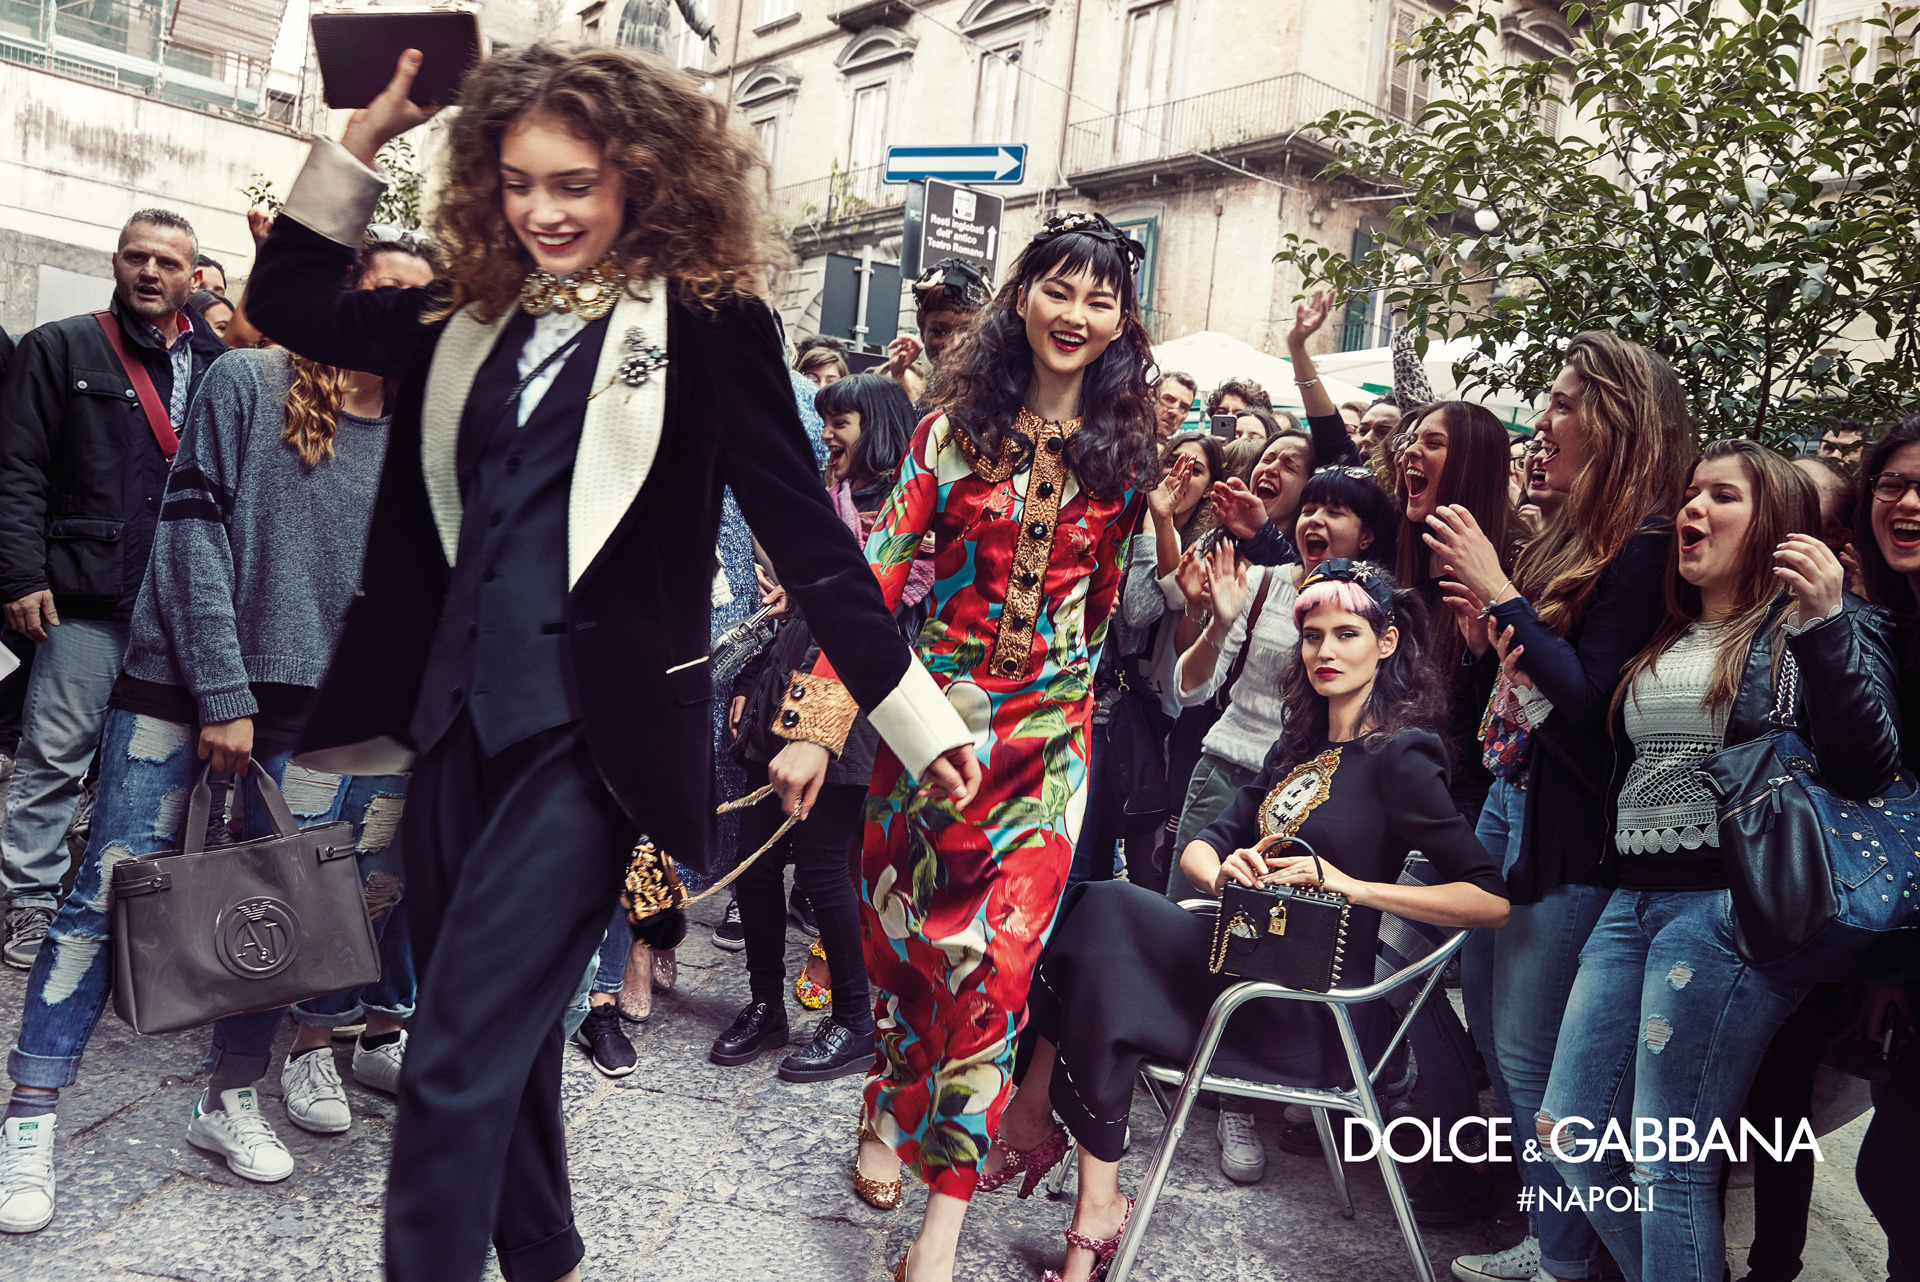 Dolce&Gabbana Fall Winter campaign 16-17 by Franco Pagetti 